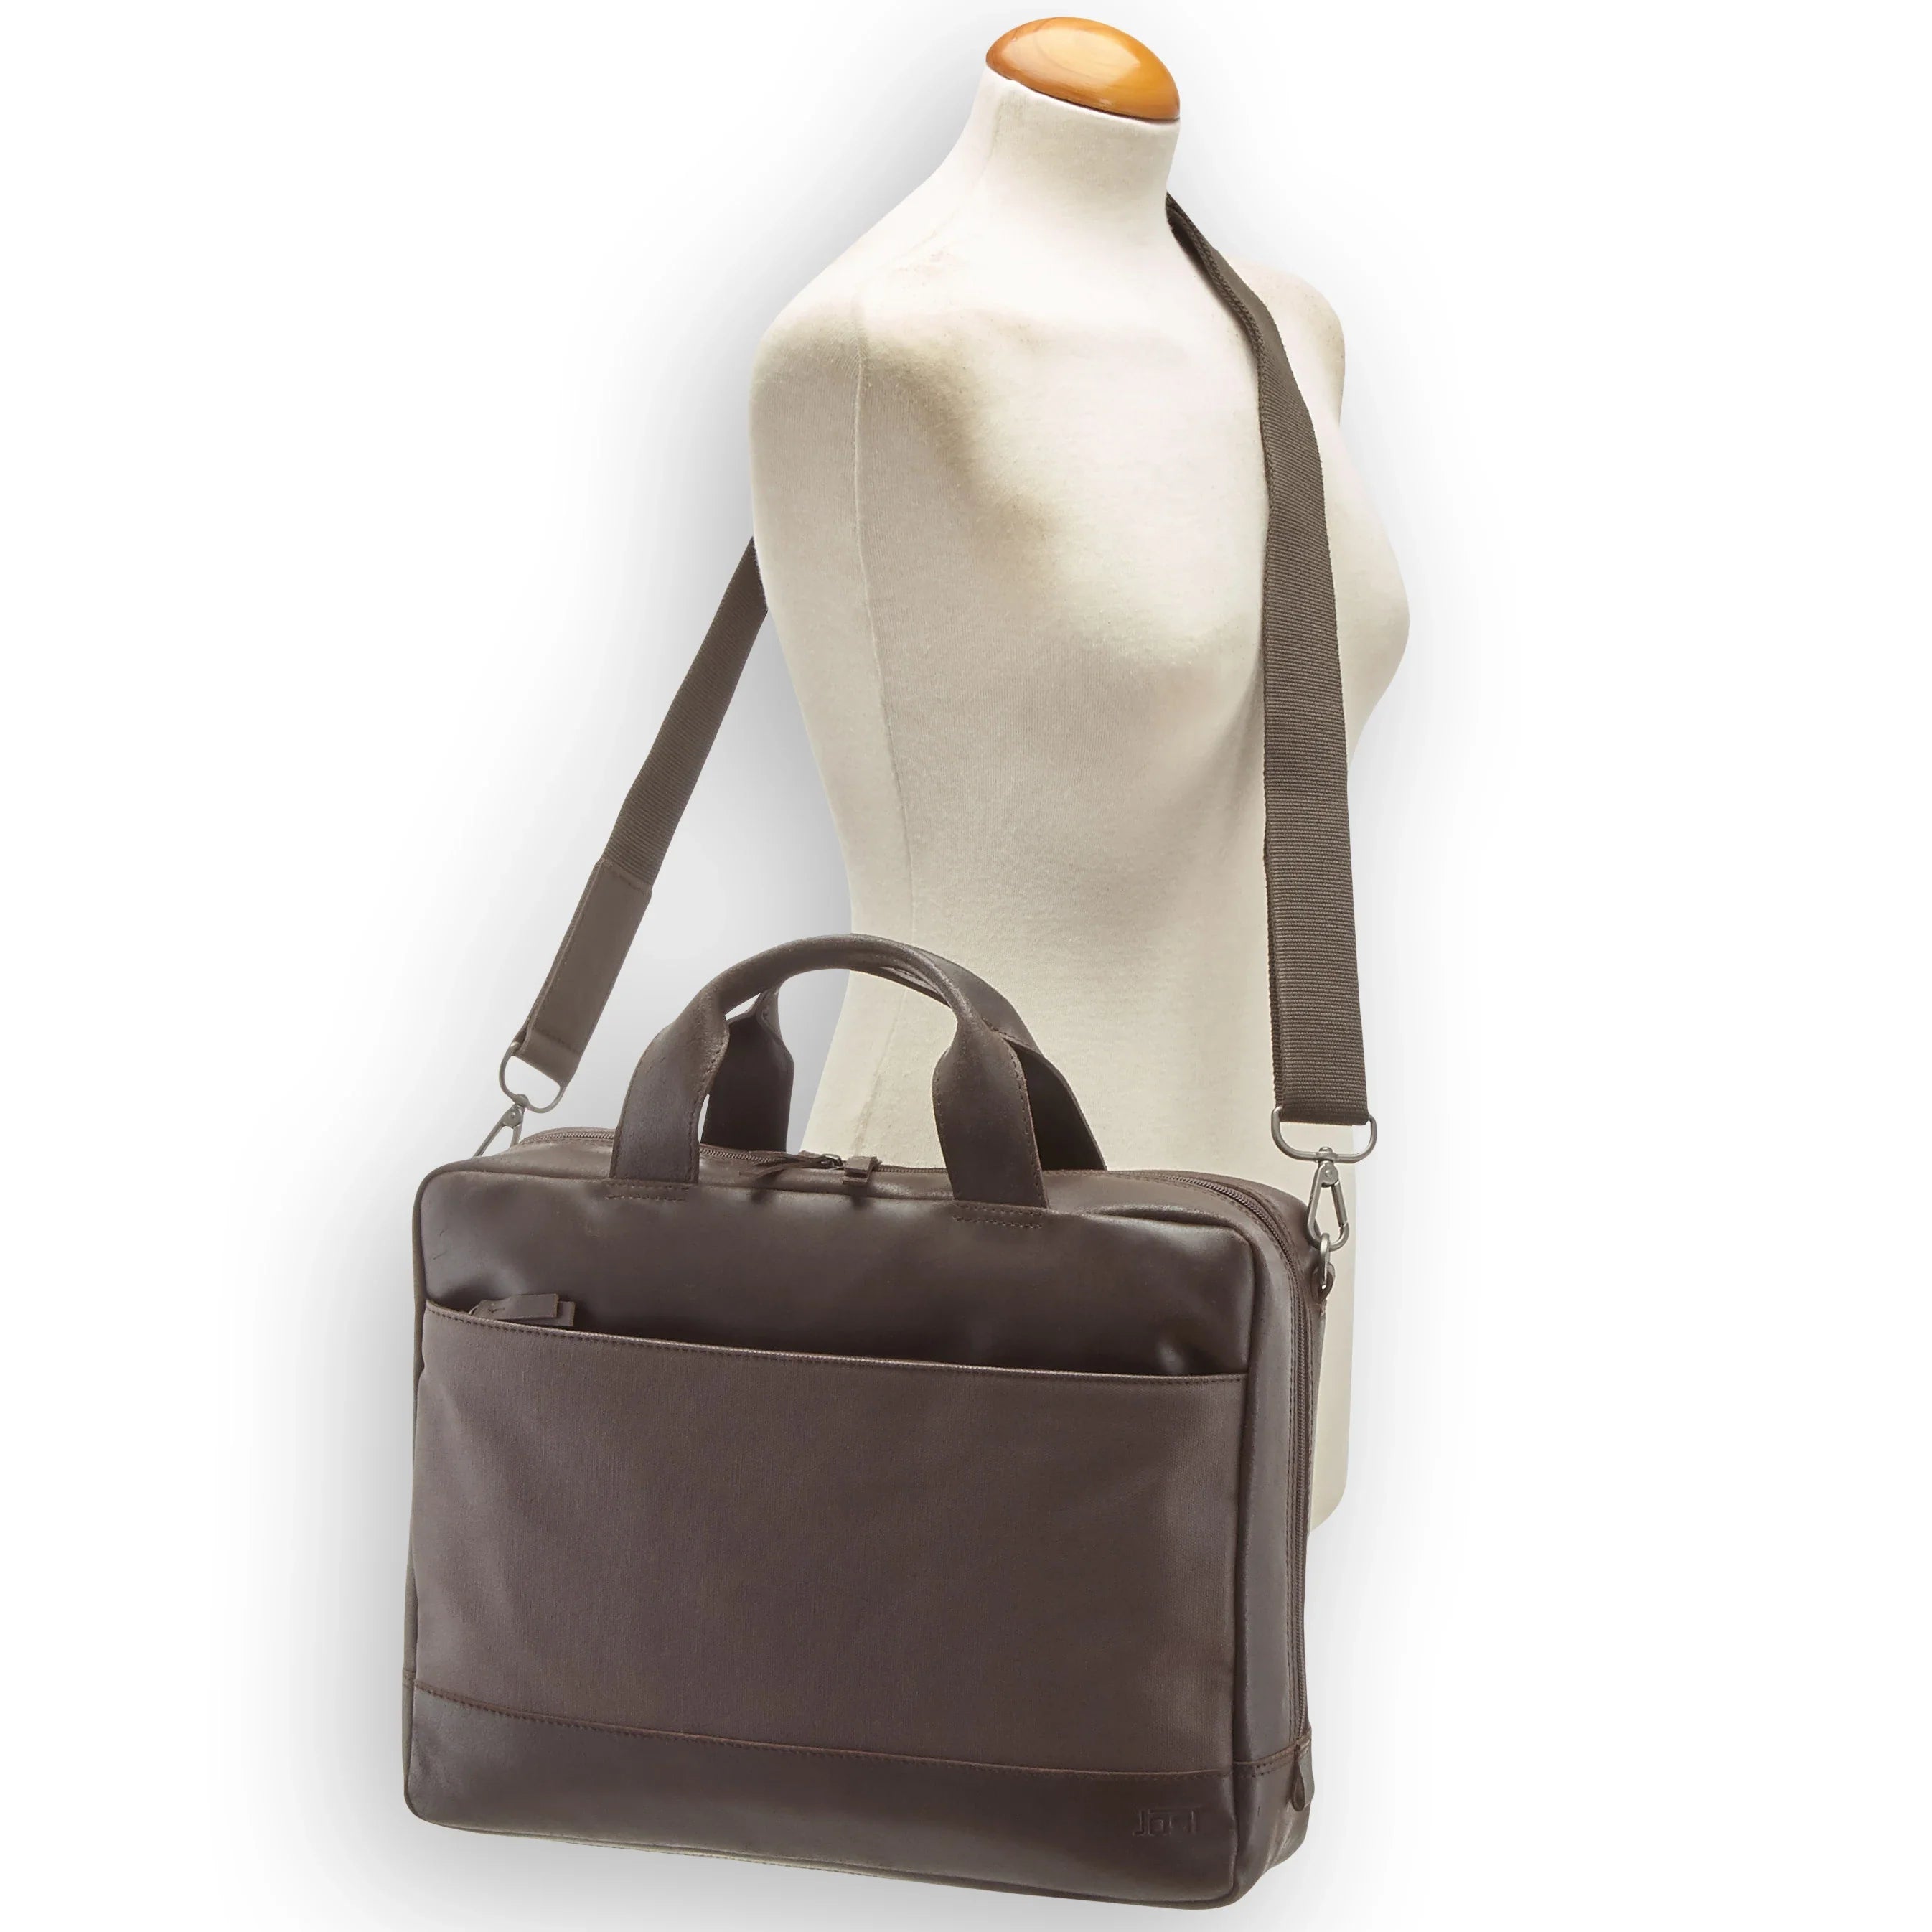 Jost Varberg business bag 36 cm - brown